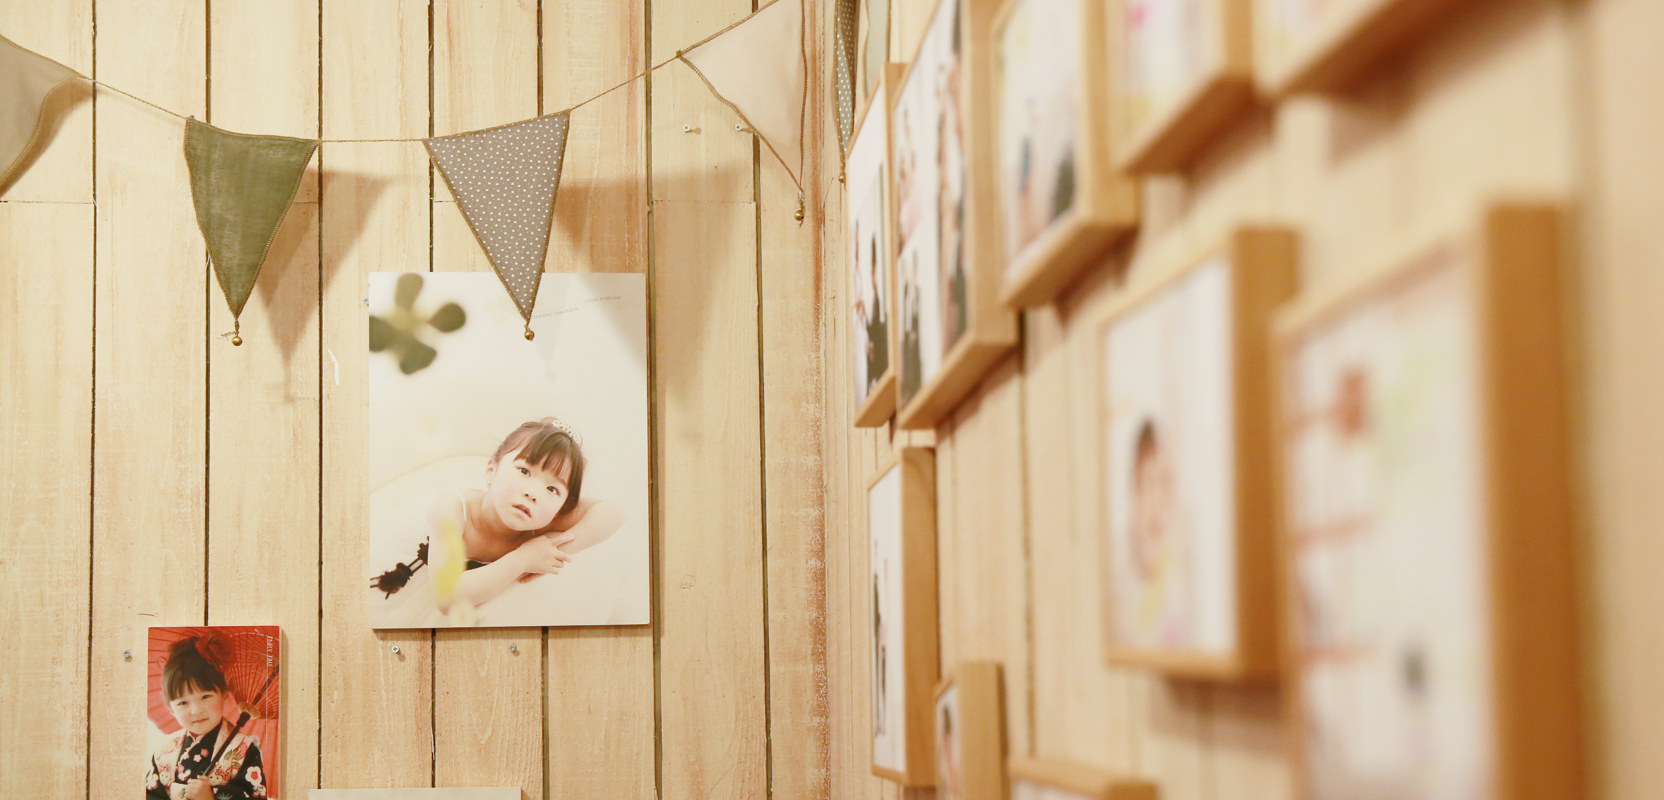 Pastel Frame パステルフレーム 子供から家族まで自然でおしゃれに残す人生の写真館 ライフスタジオ